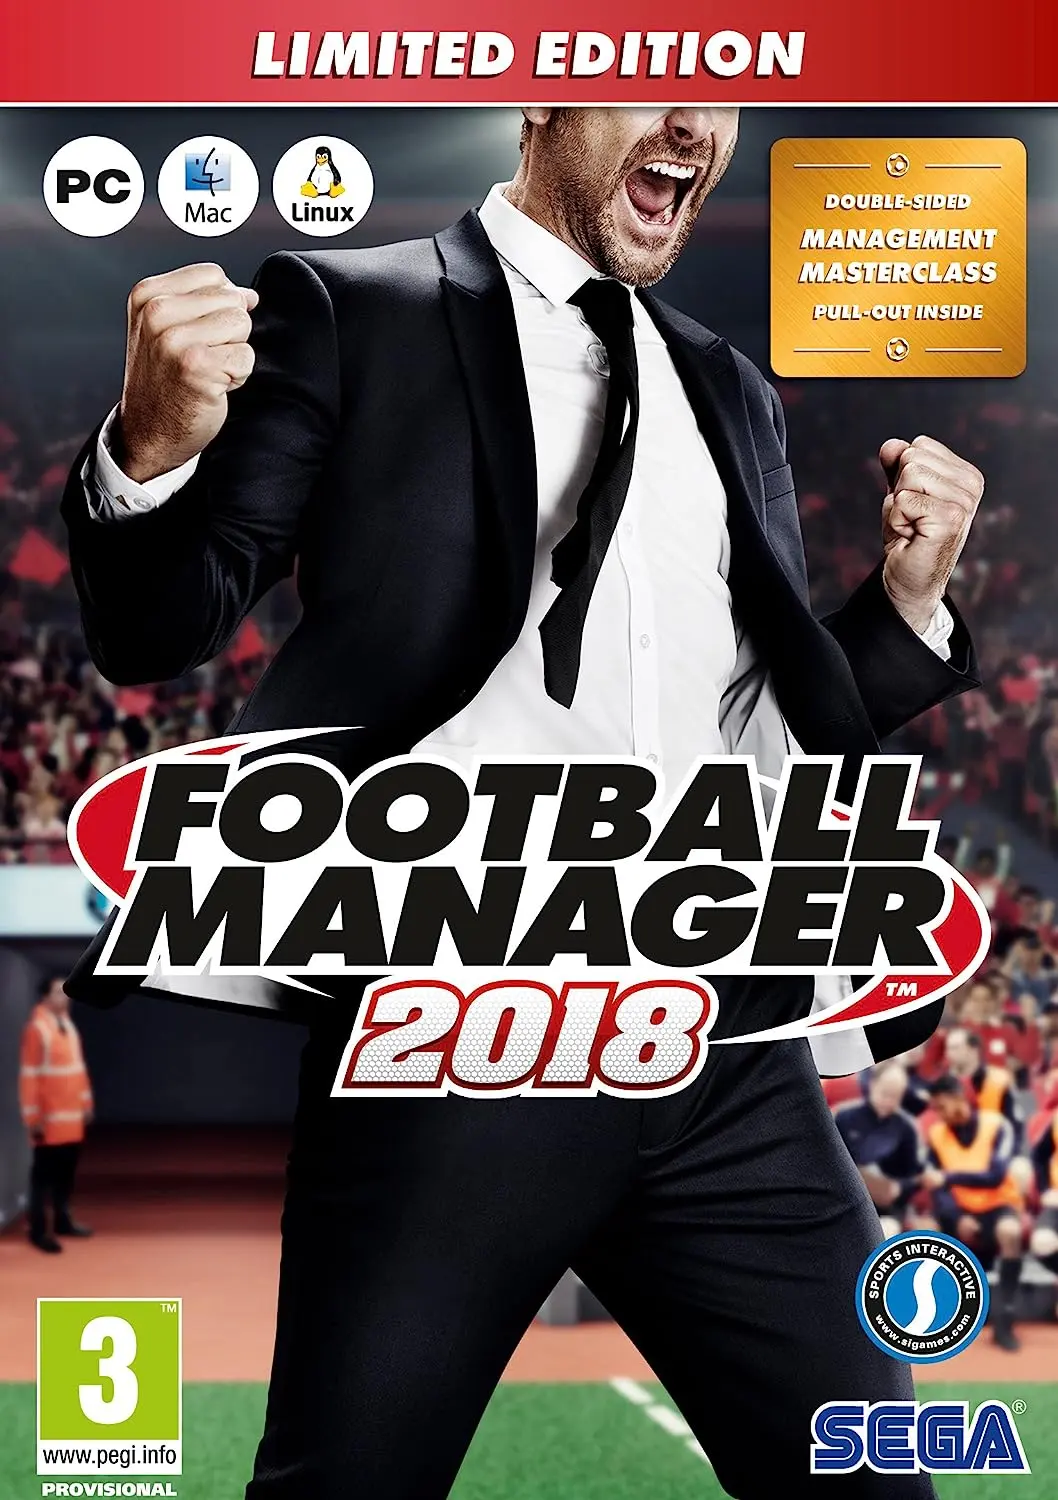 Football Manager 2018 Limited Edition (EU) (PC / Mac / Linux) - Steam - Digital Code